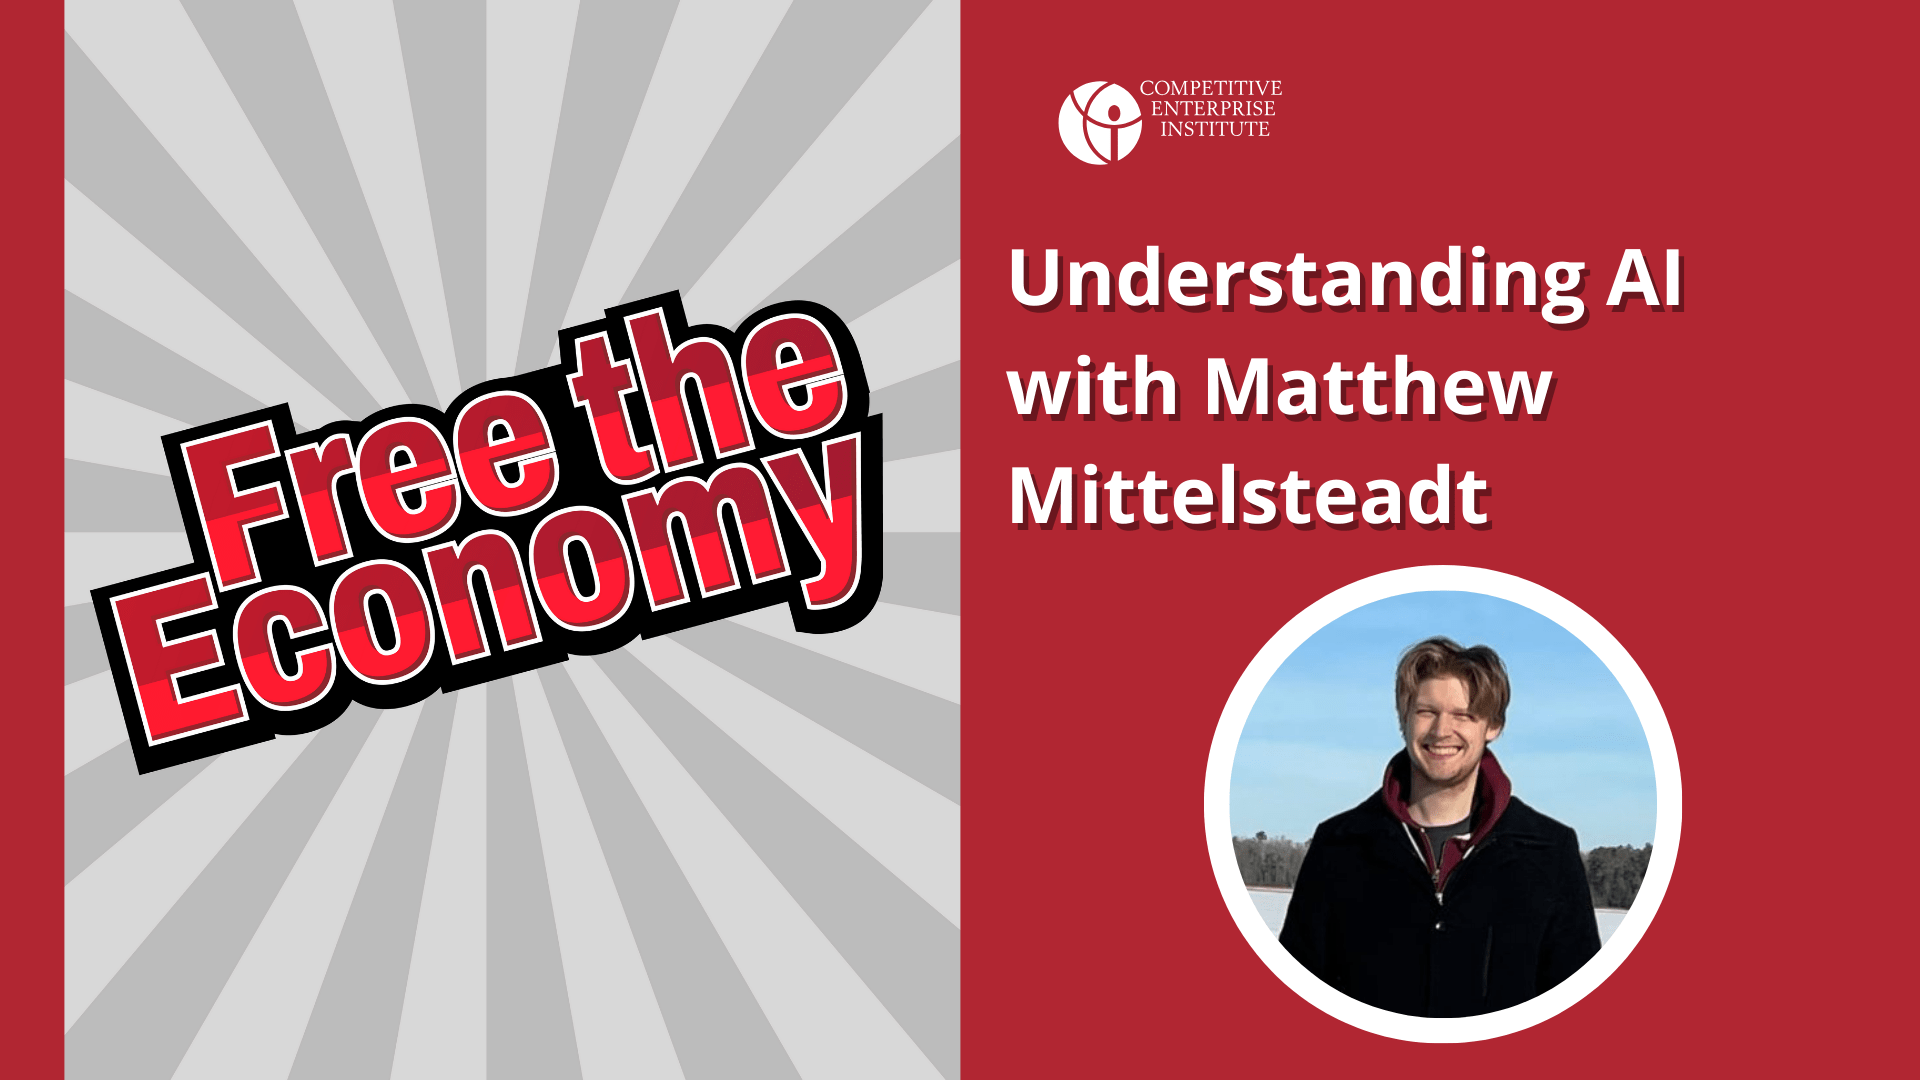 Understanding AI with Matthew Mittelsteadt